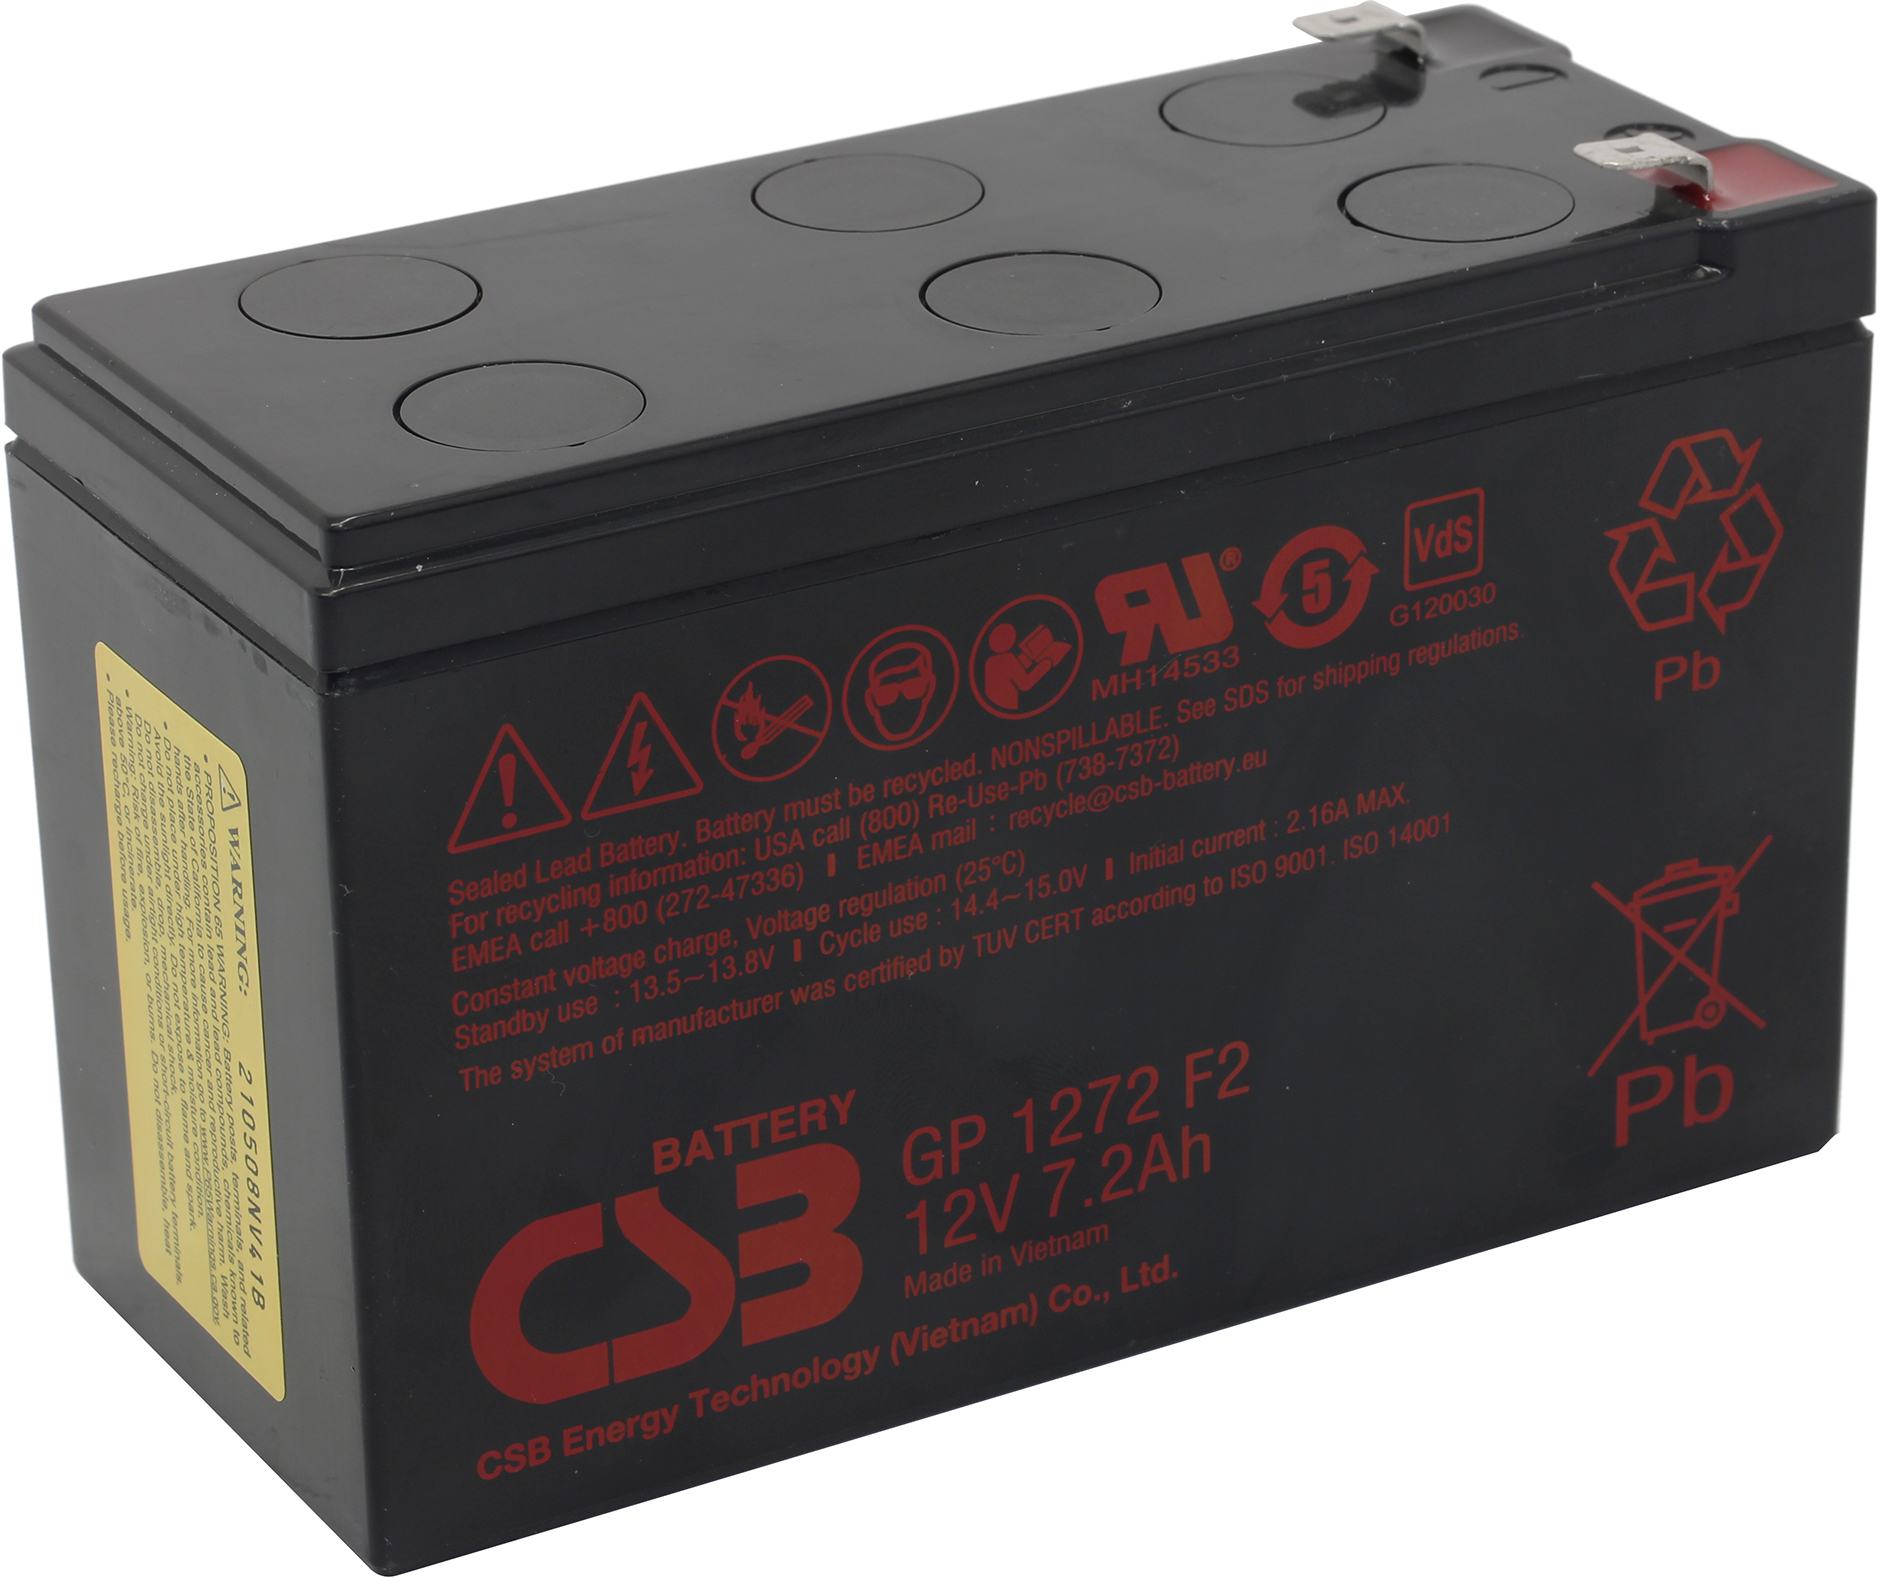 Gp1272 12v. Аккумуляторная батарея CSB gp1272 f2. Аккумулятор для ИБП 12v 7ah CSB GP 1272 f2. Аккумулятор CSB gp1272f2 (12v, 7,2ah) для ups. Аккумуляторная батарея для ИБП CSB GP 1272 f2 12v 7.2Ah.